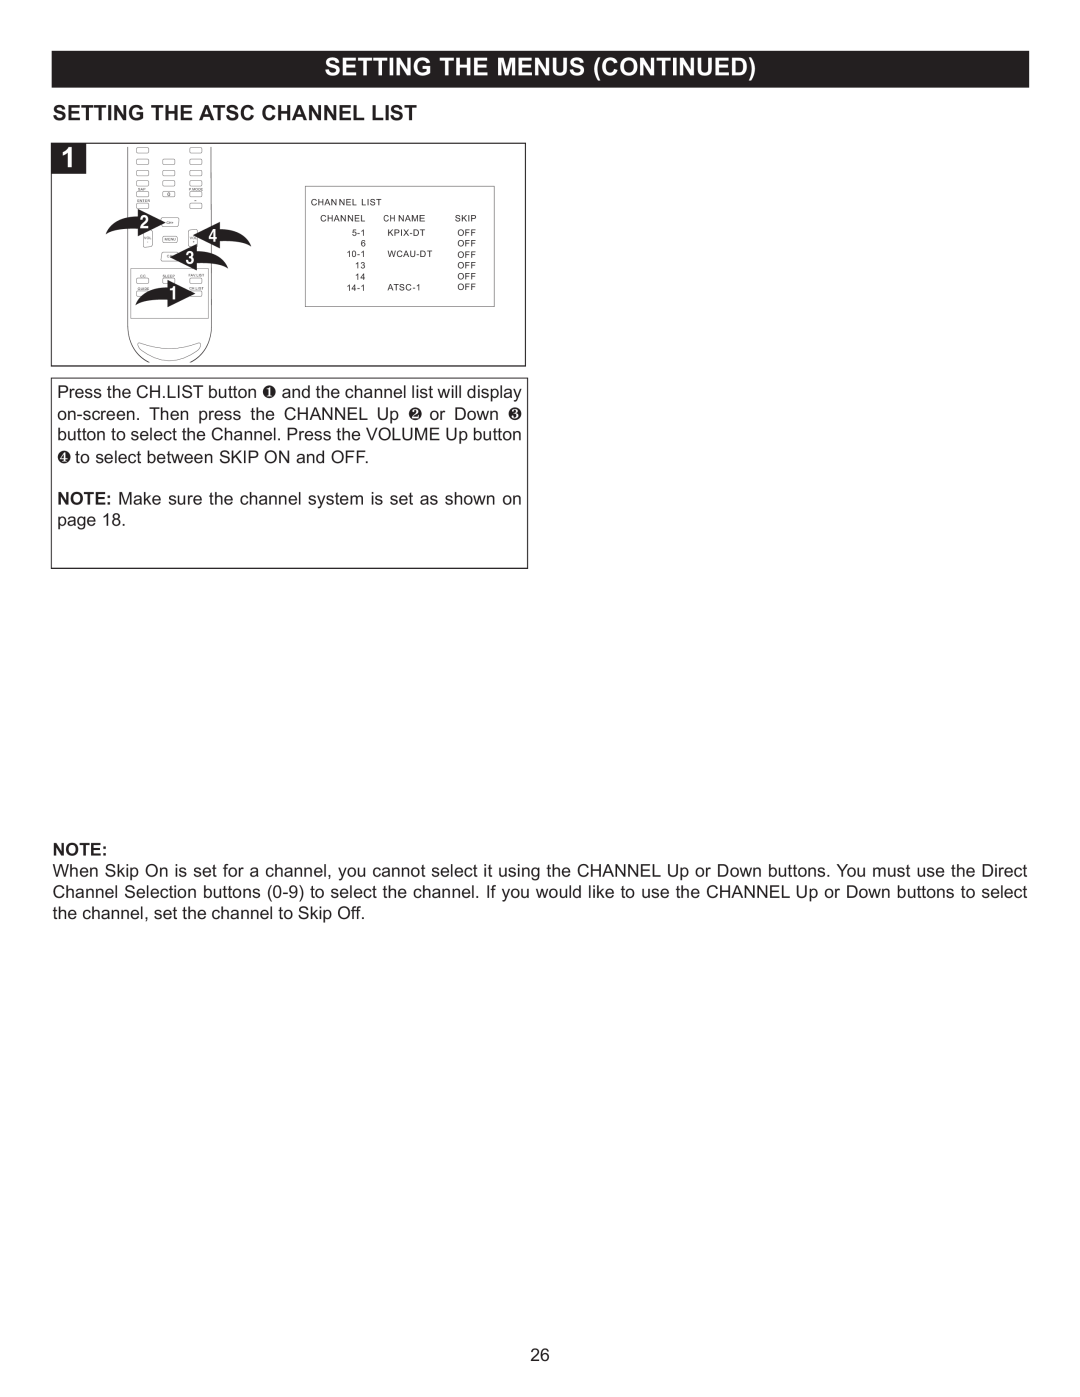 Memorex MT2028D-BLK manual Setting The Atsc Channel List 